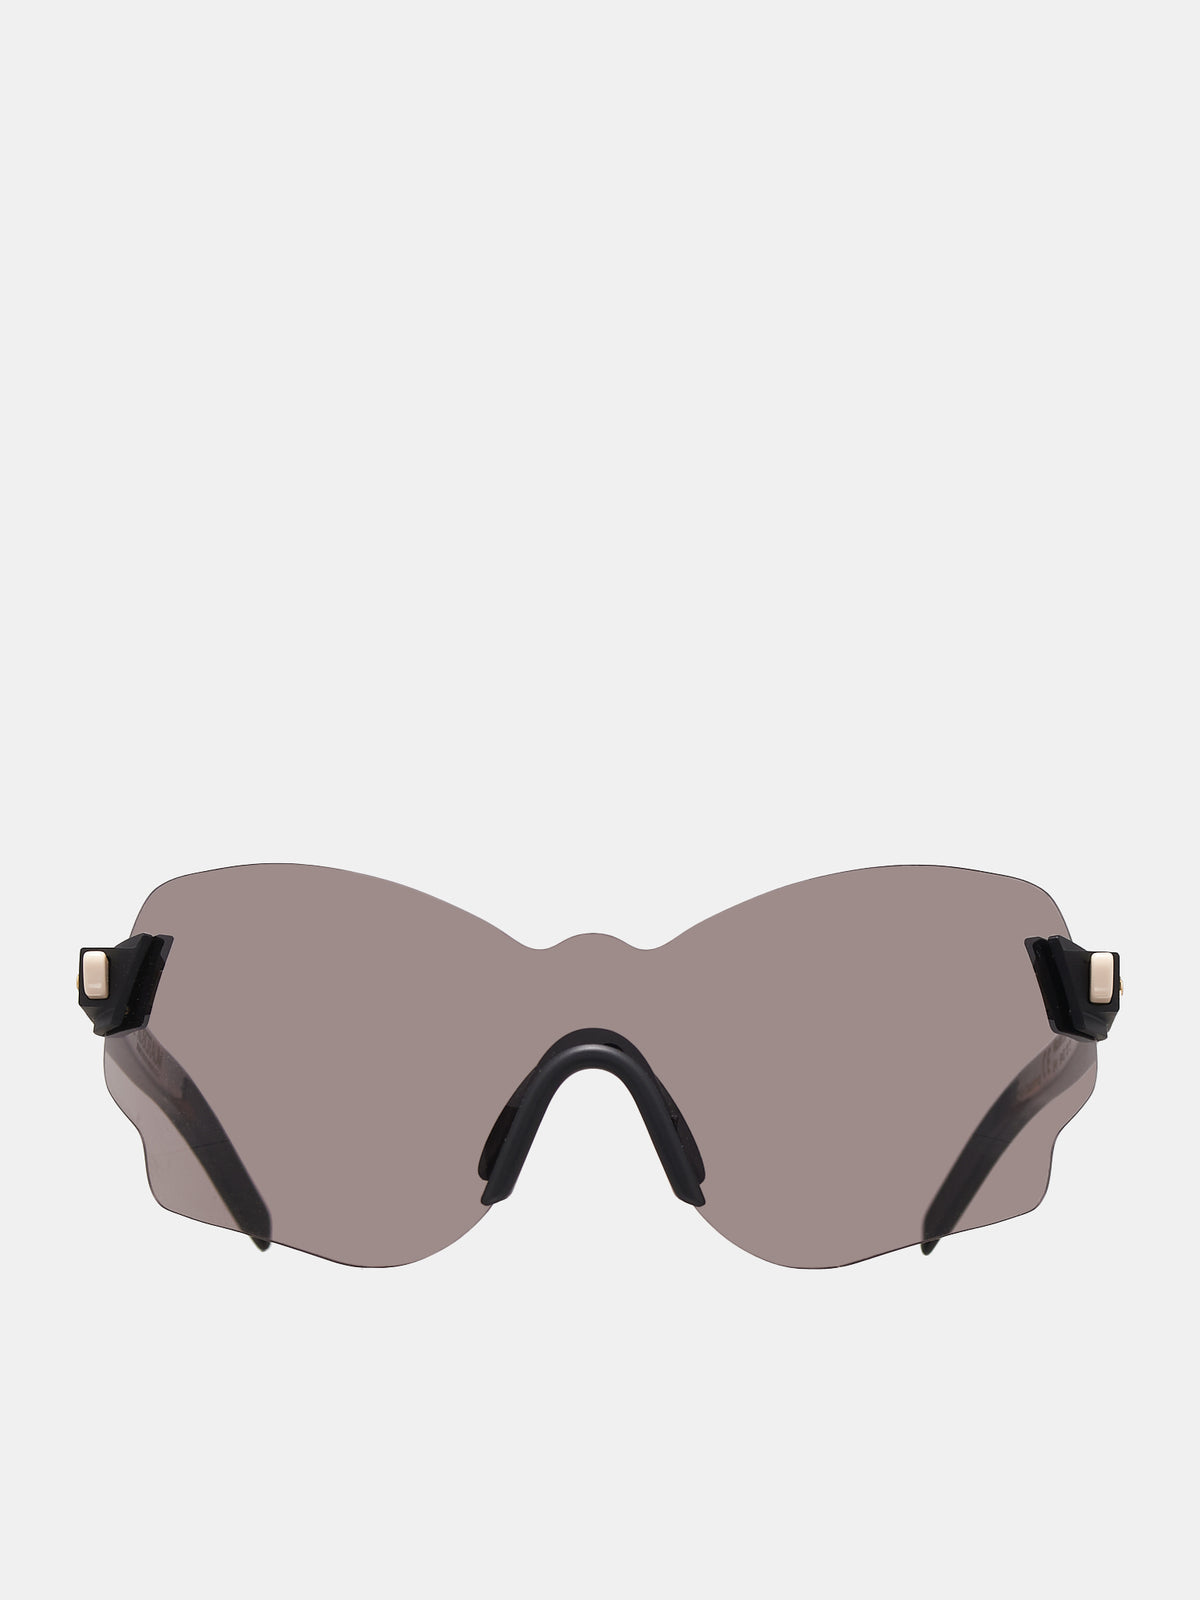 E51 Sunglasses (E51-00-99-BRH-DARK-GREY)